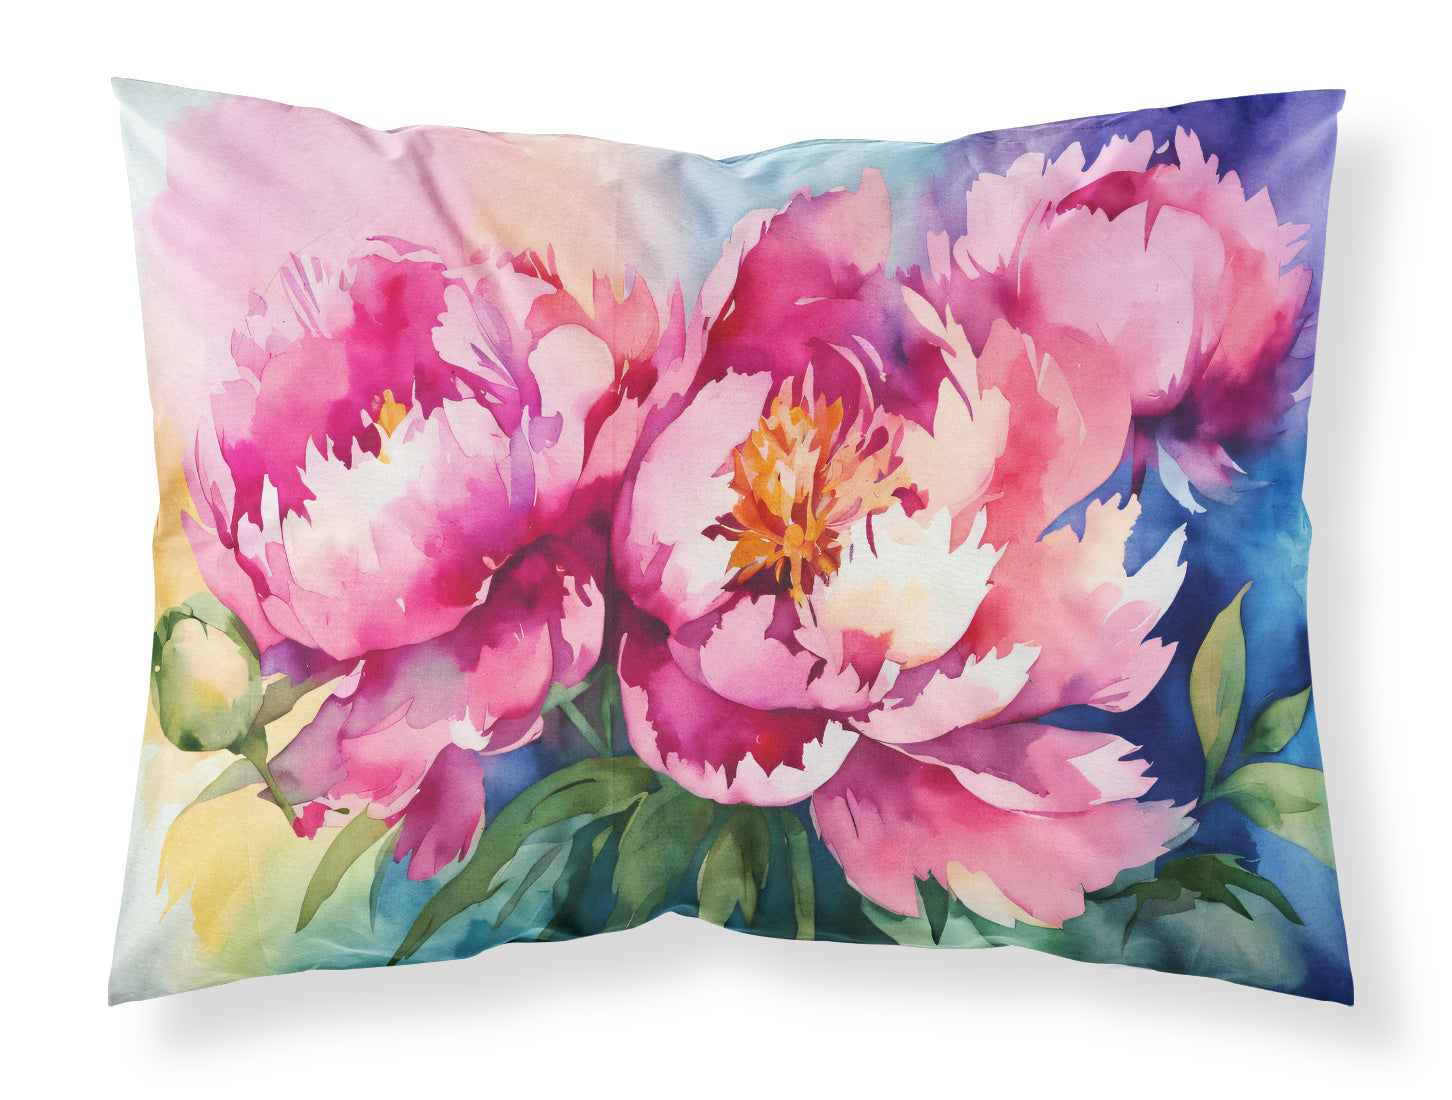 Buy this Peonies in Watercolor Fabric Standard Pillowcase